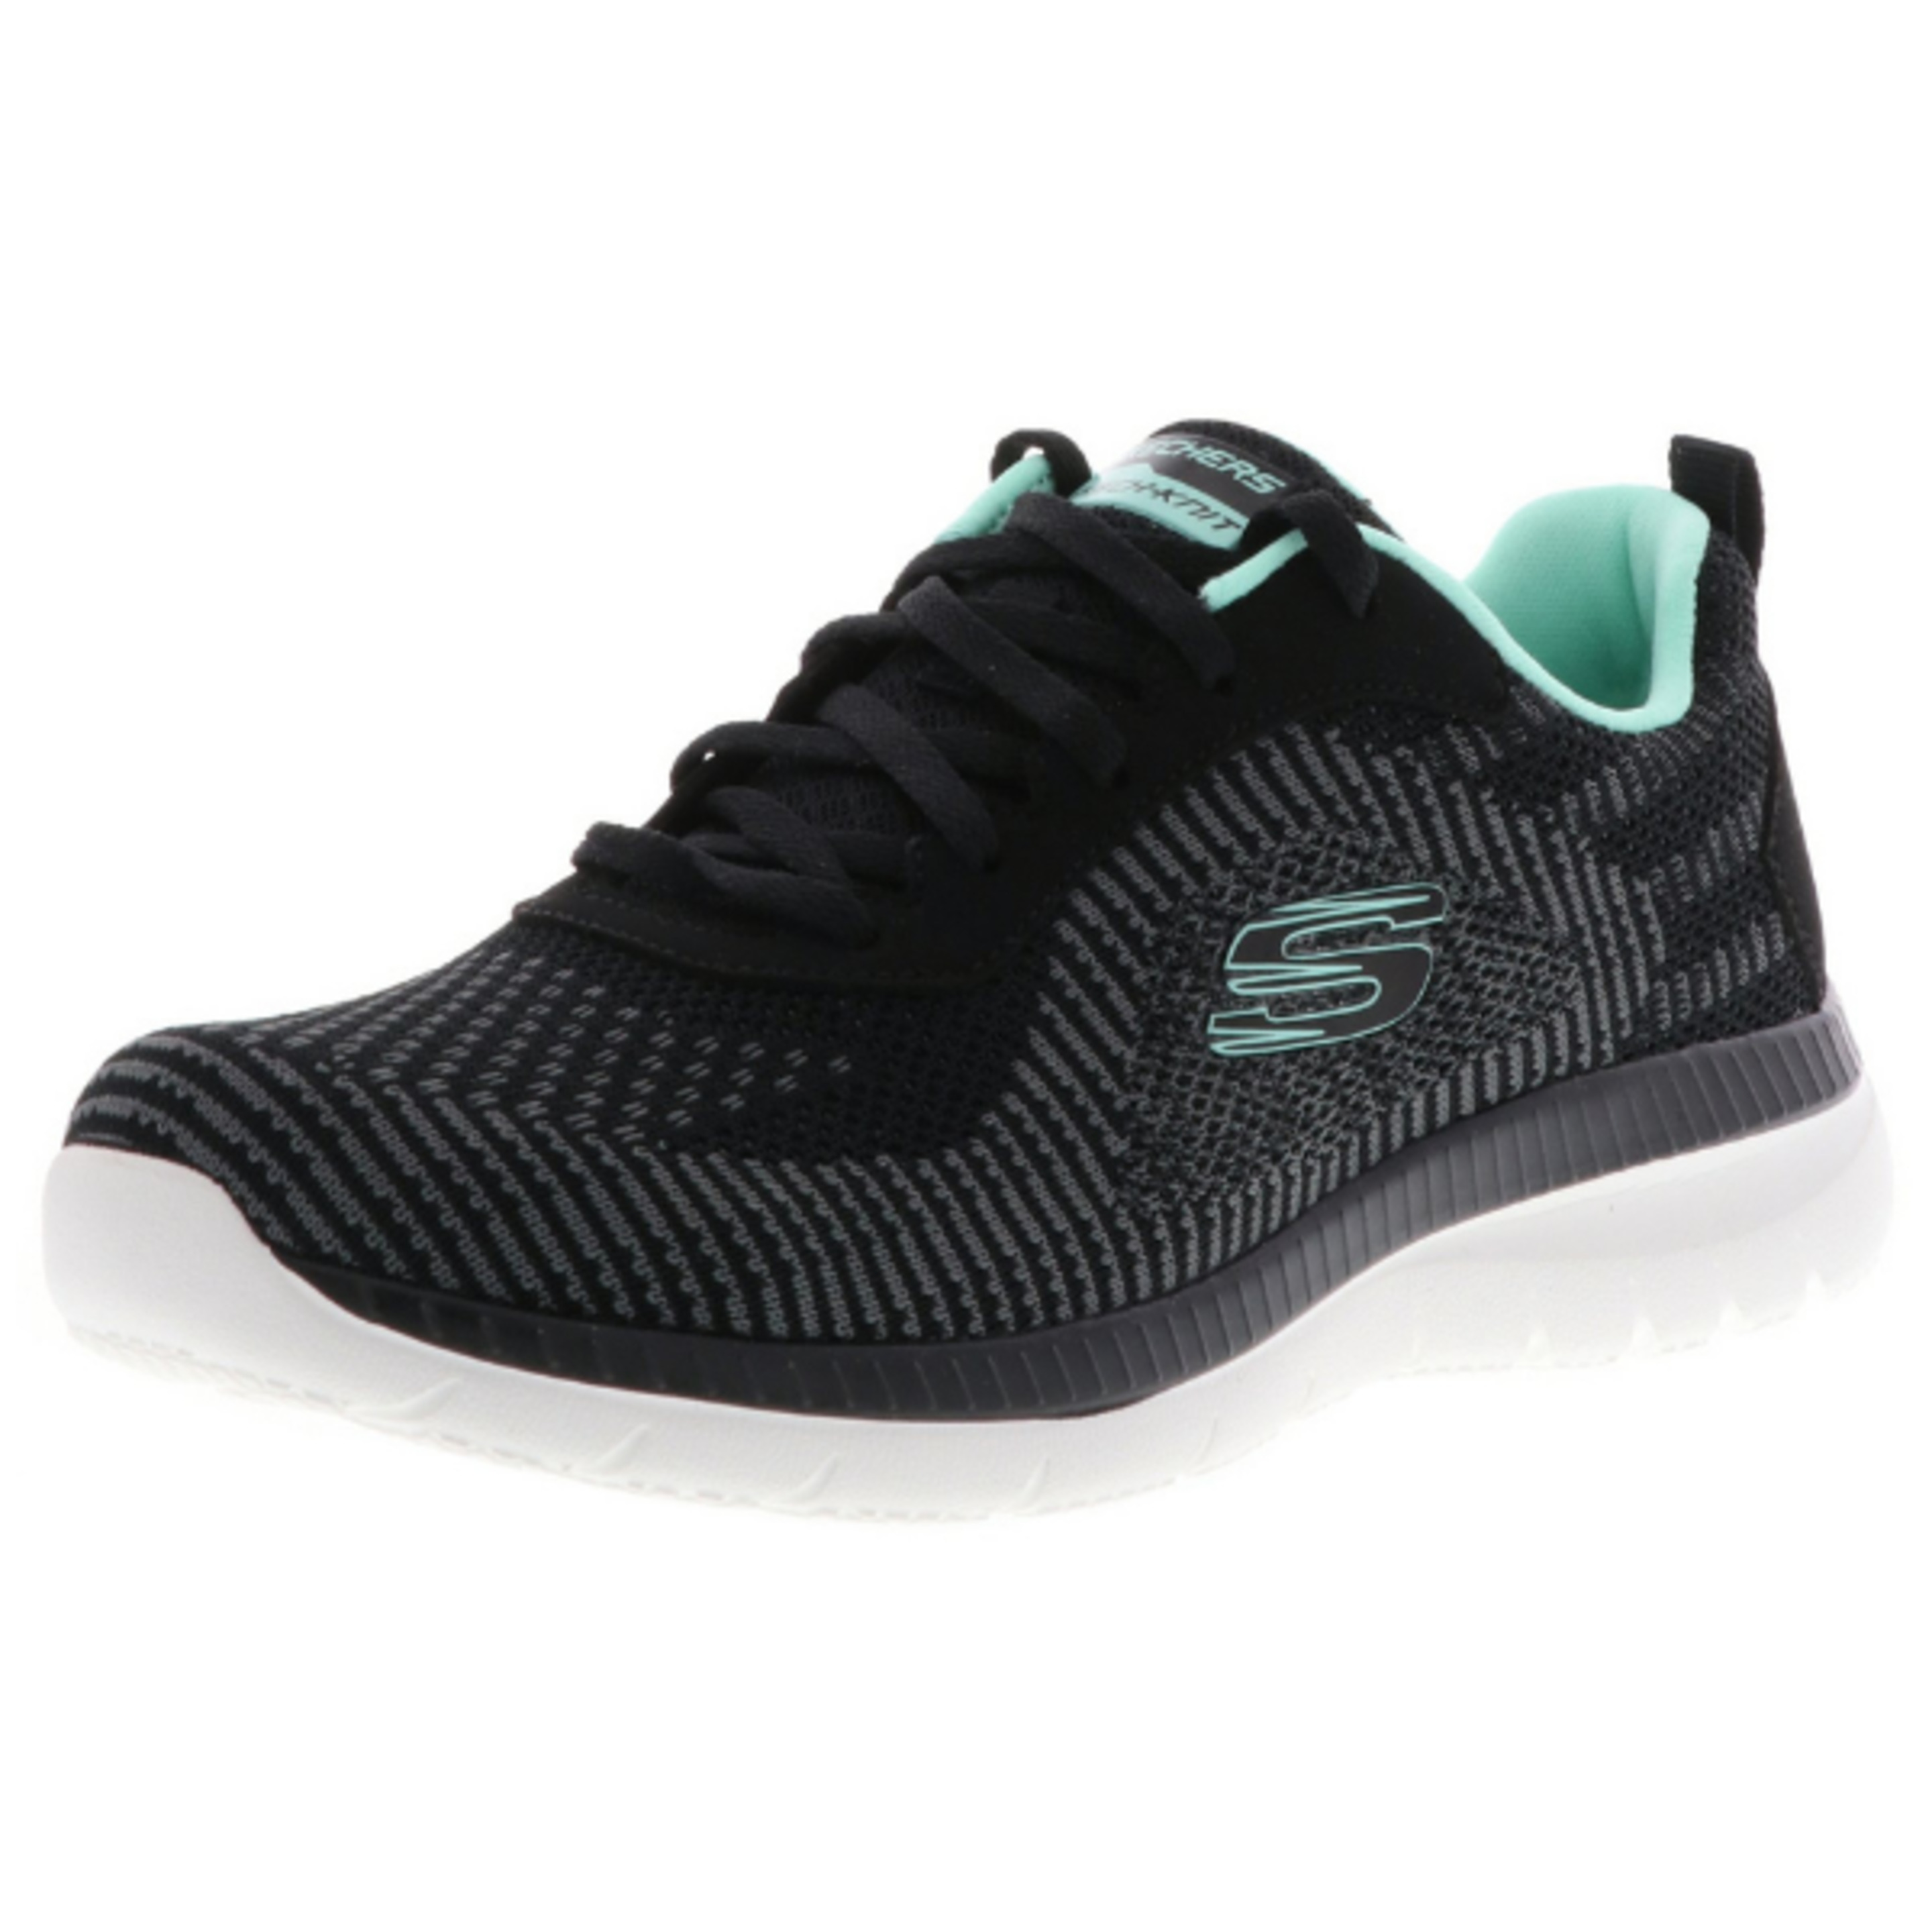 Skechers Bountiful-purist. Black/turquoise. 149220/bktq. - Negro/Turquesa - Zapatillas Deportivas Mujer.  MKP